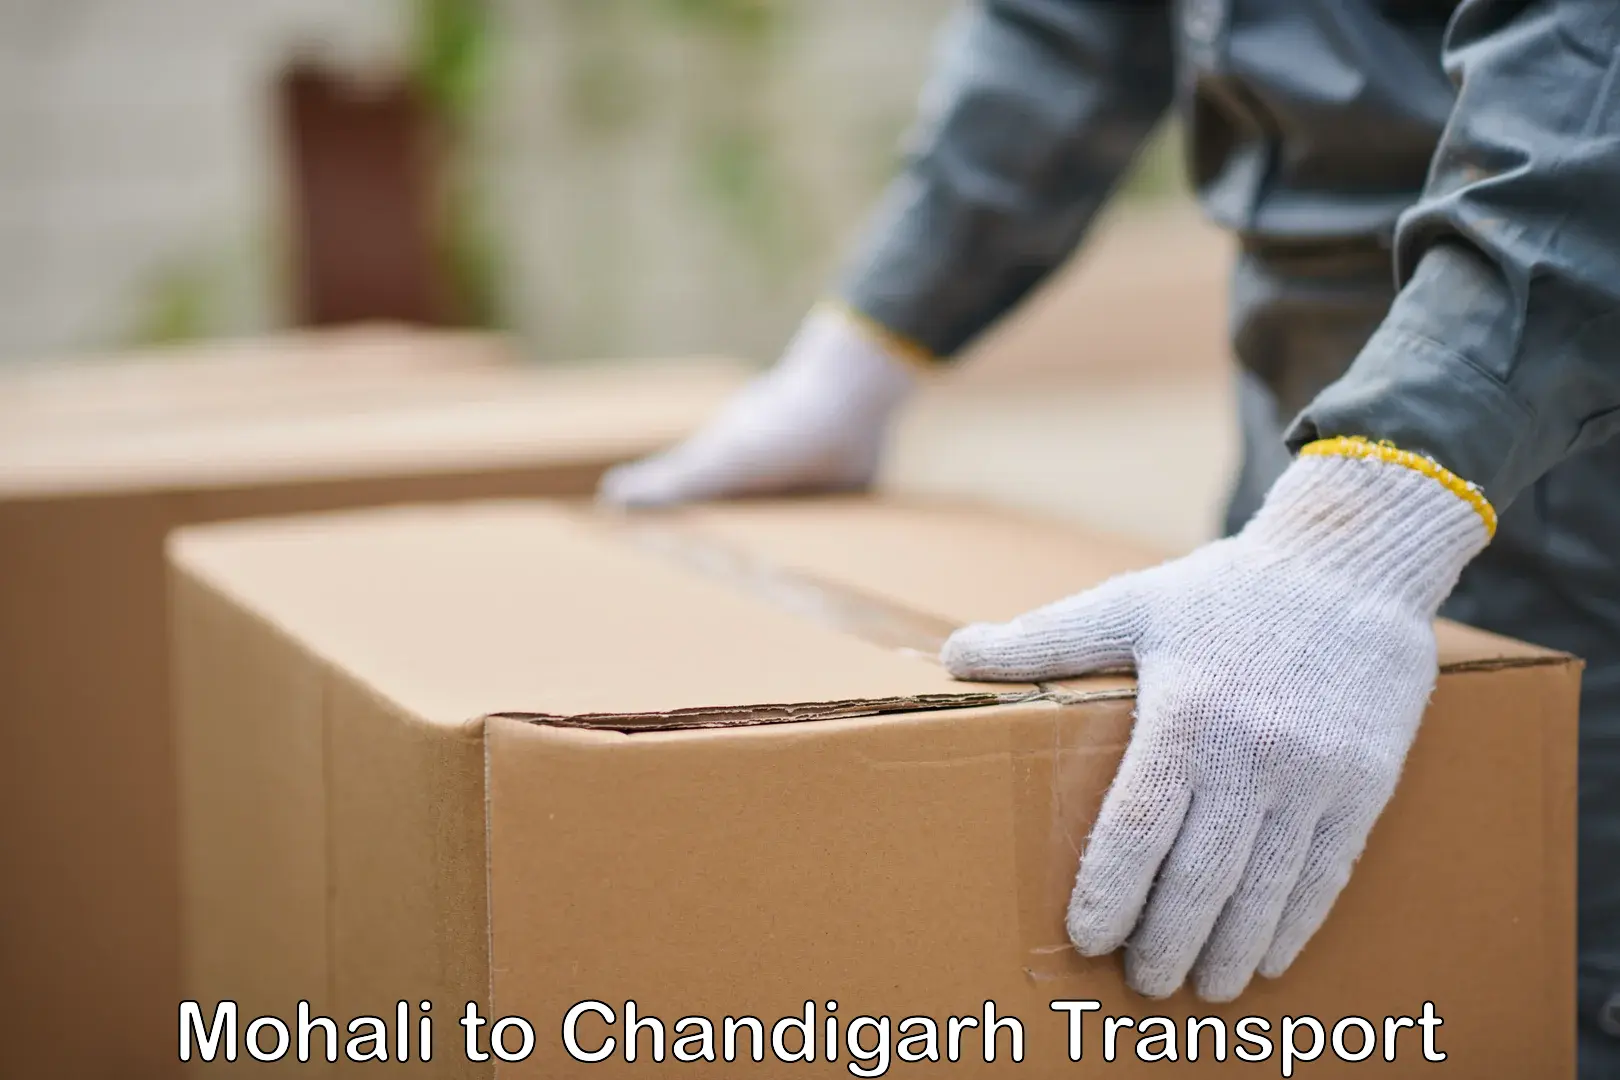 Shipping partner Mohali to Chandigarh